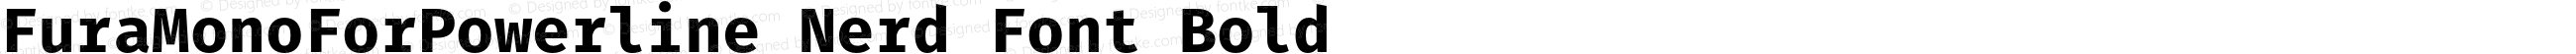 Fura Mono Bold for Powerline Nerd Font Plus Font Awesome Plus Octicons Plus Pomicons Mono